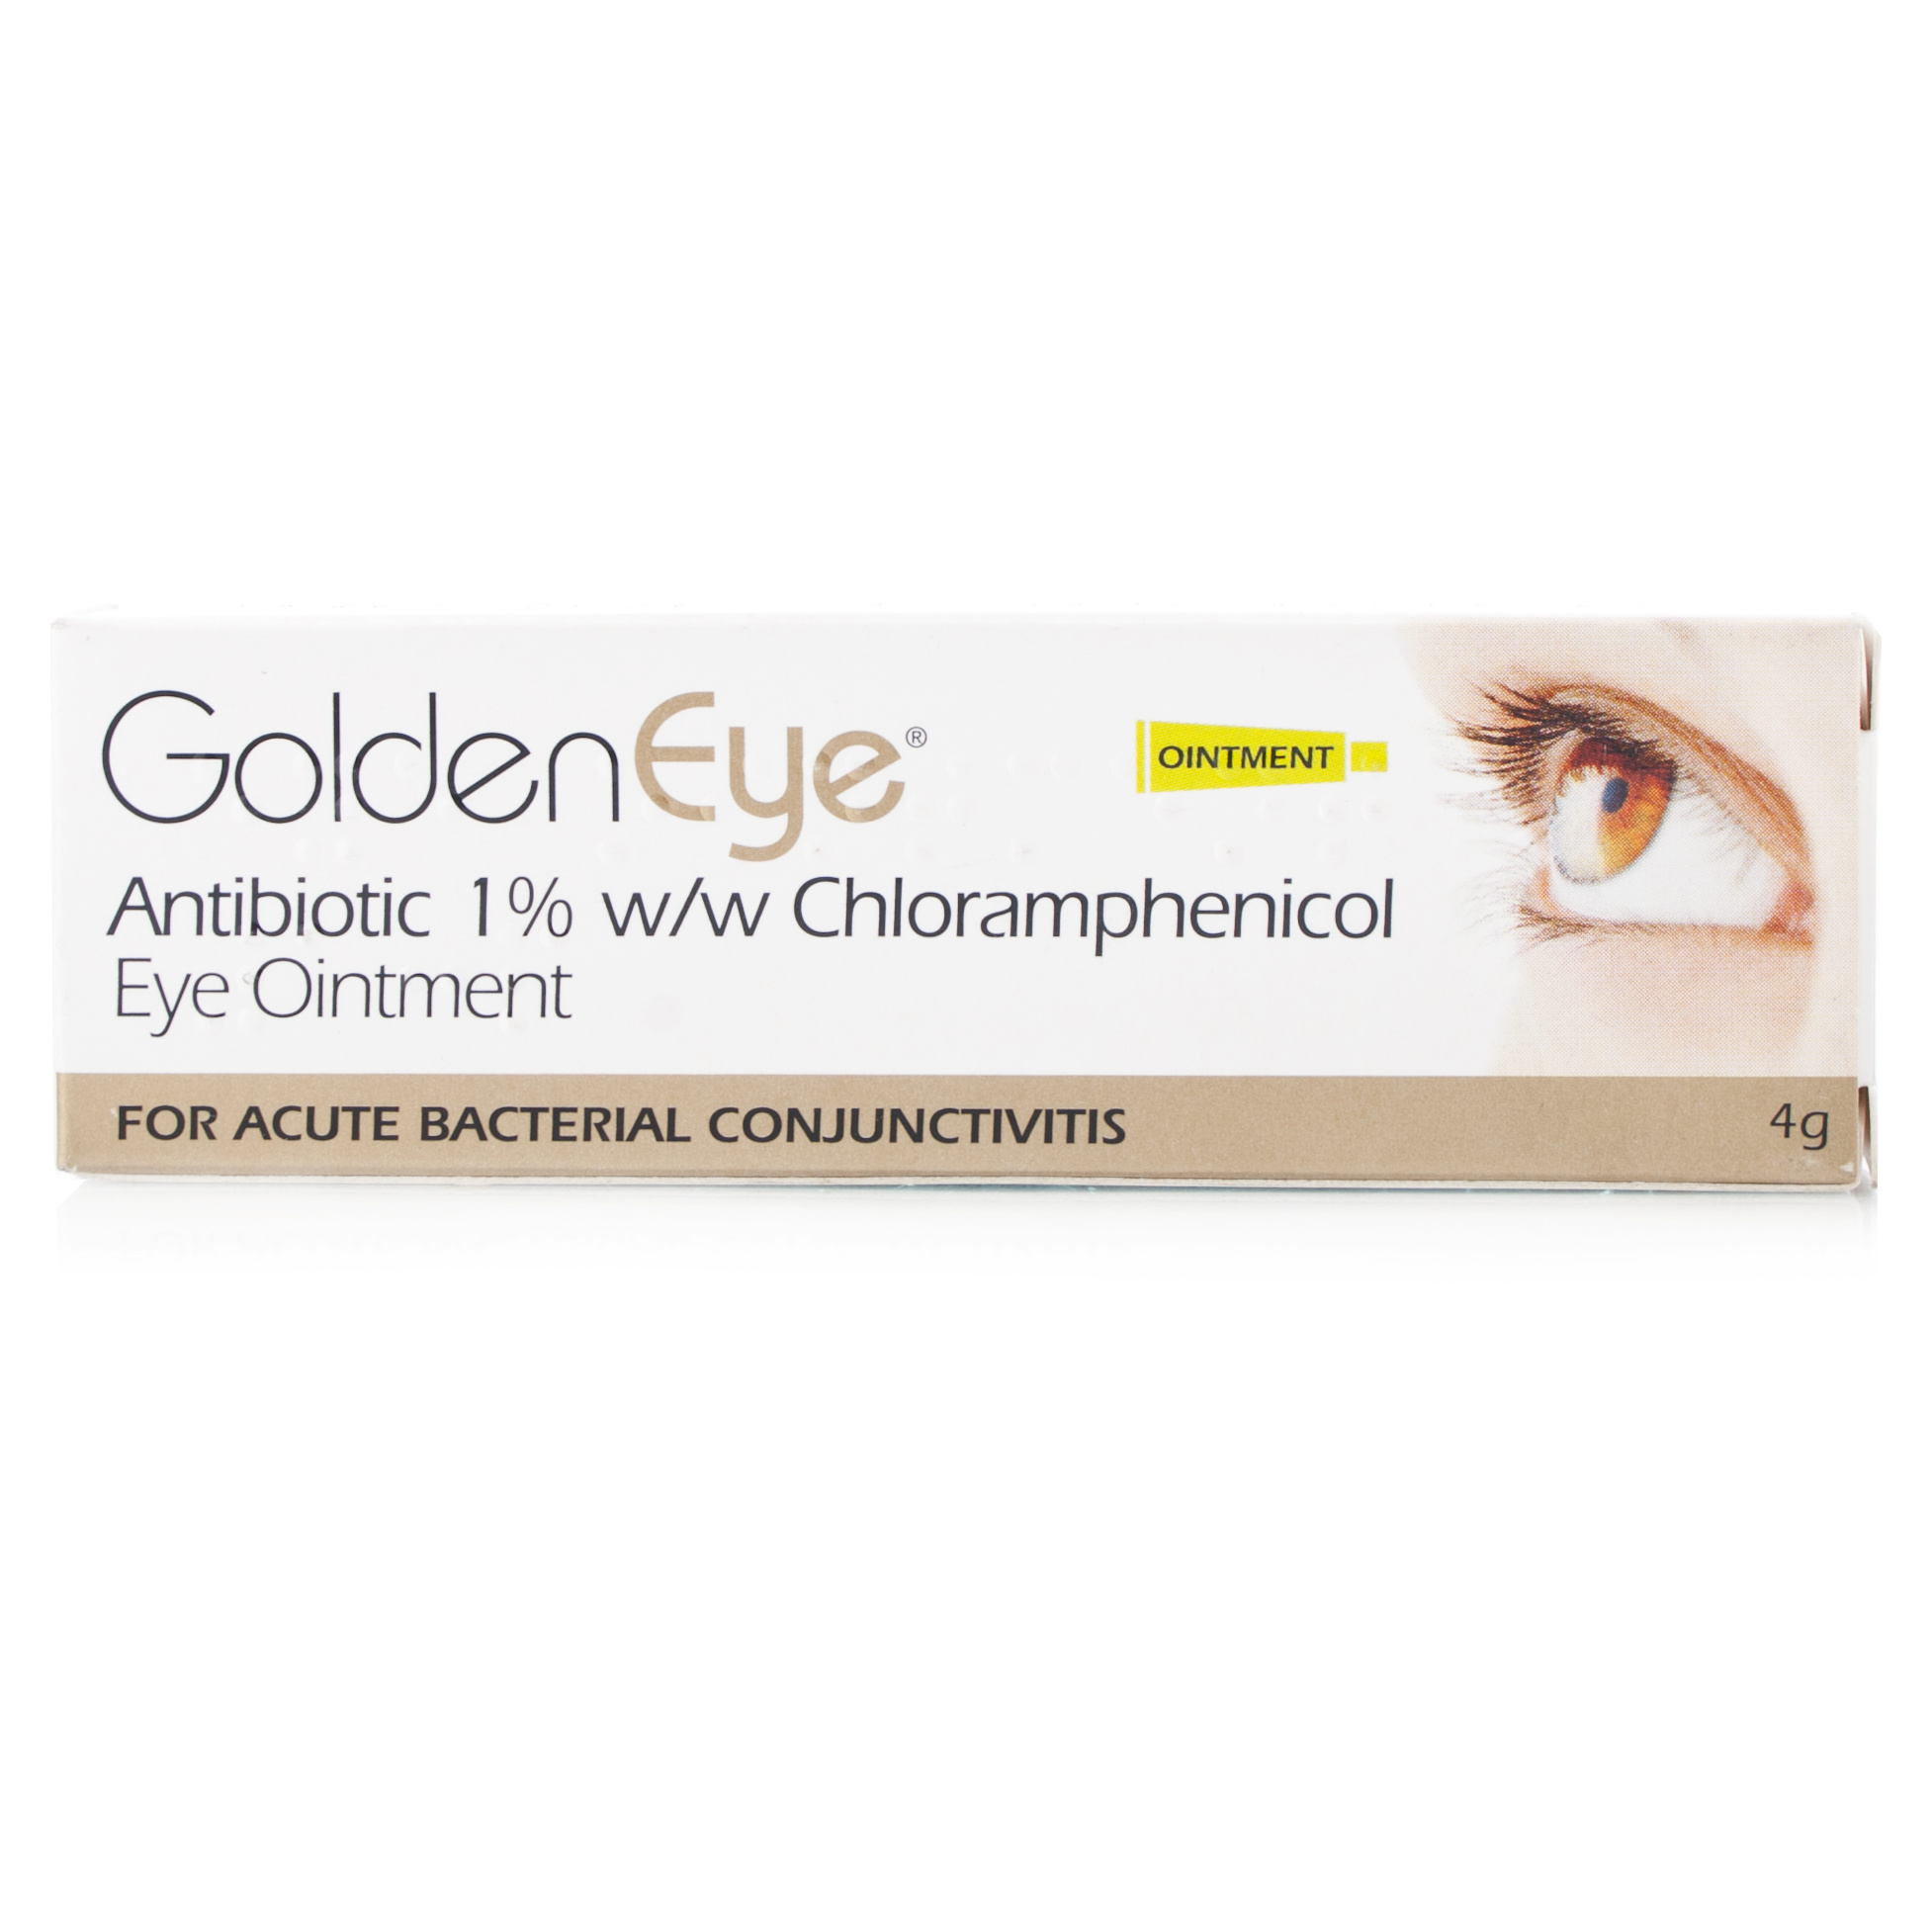 Golden Eye Chloramphenicol Eye Ointment Review